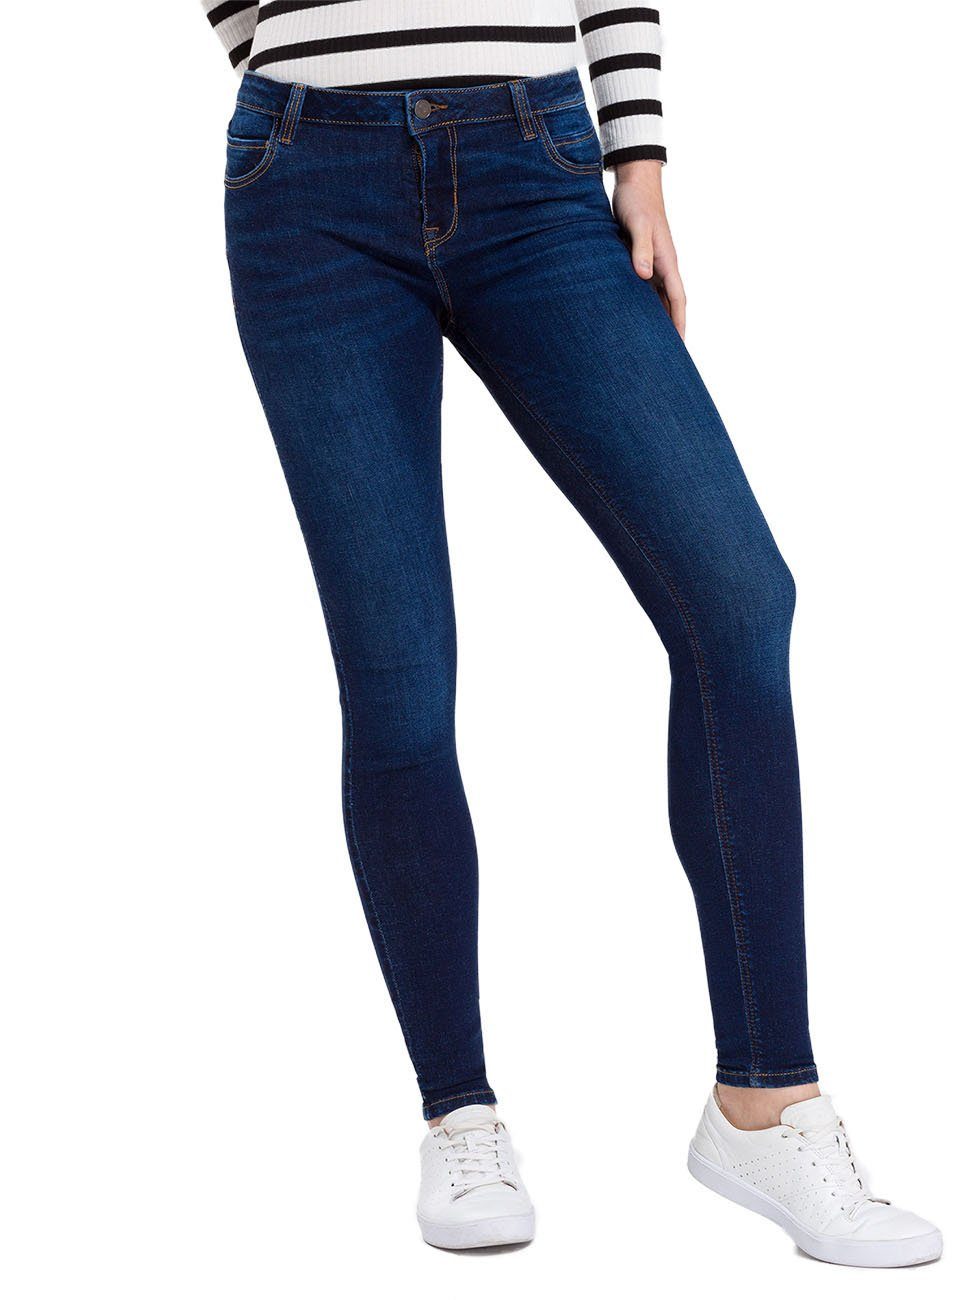 CROSS JEANS® Jeanshose Stretch Page Skinny-fit-Jeans mit